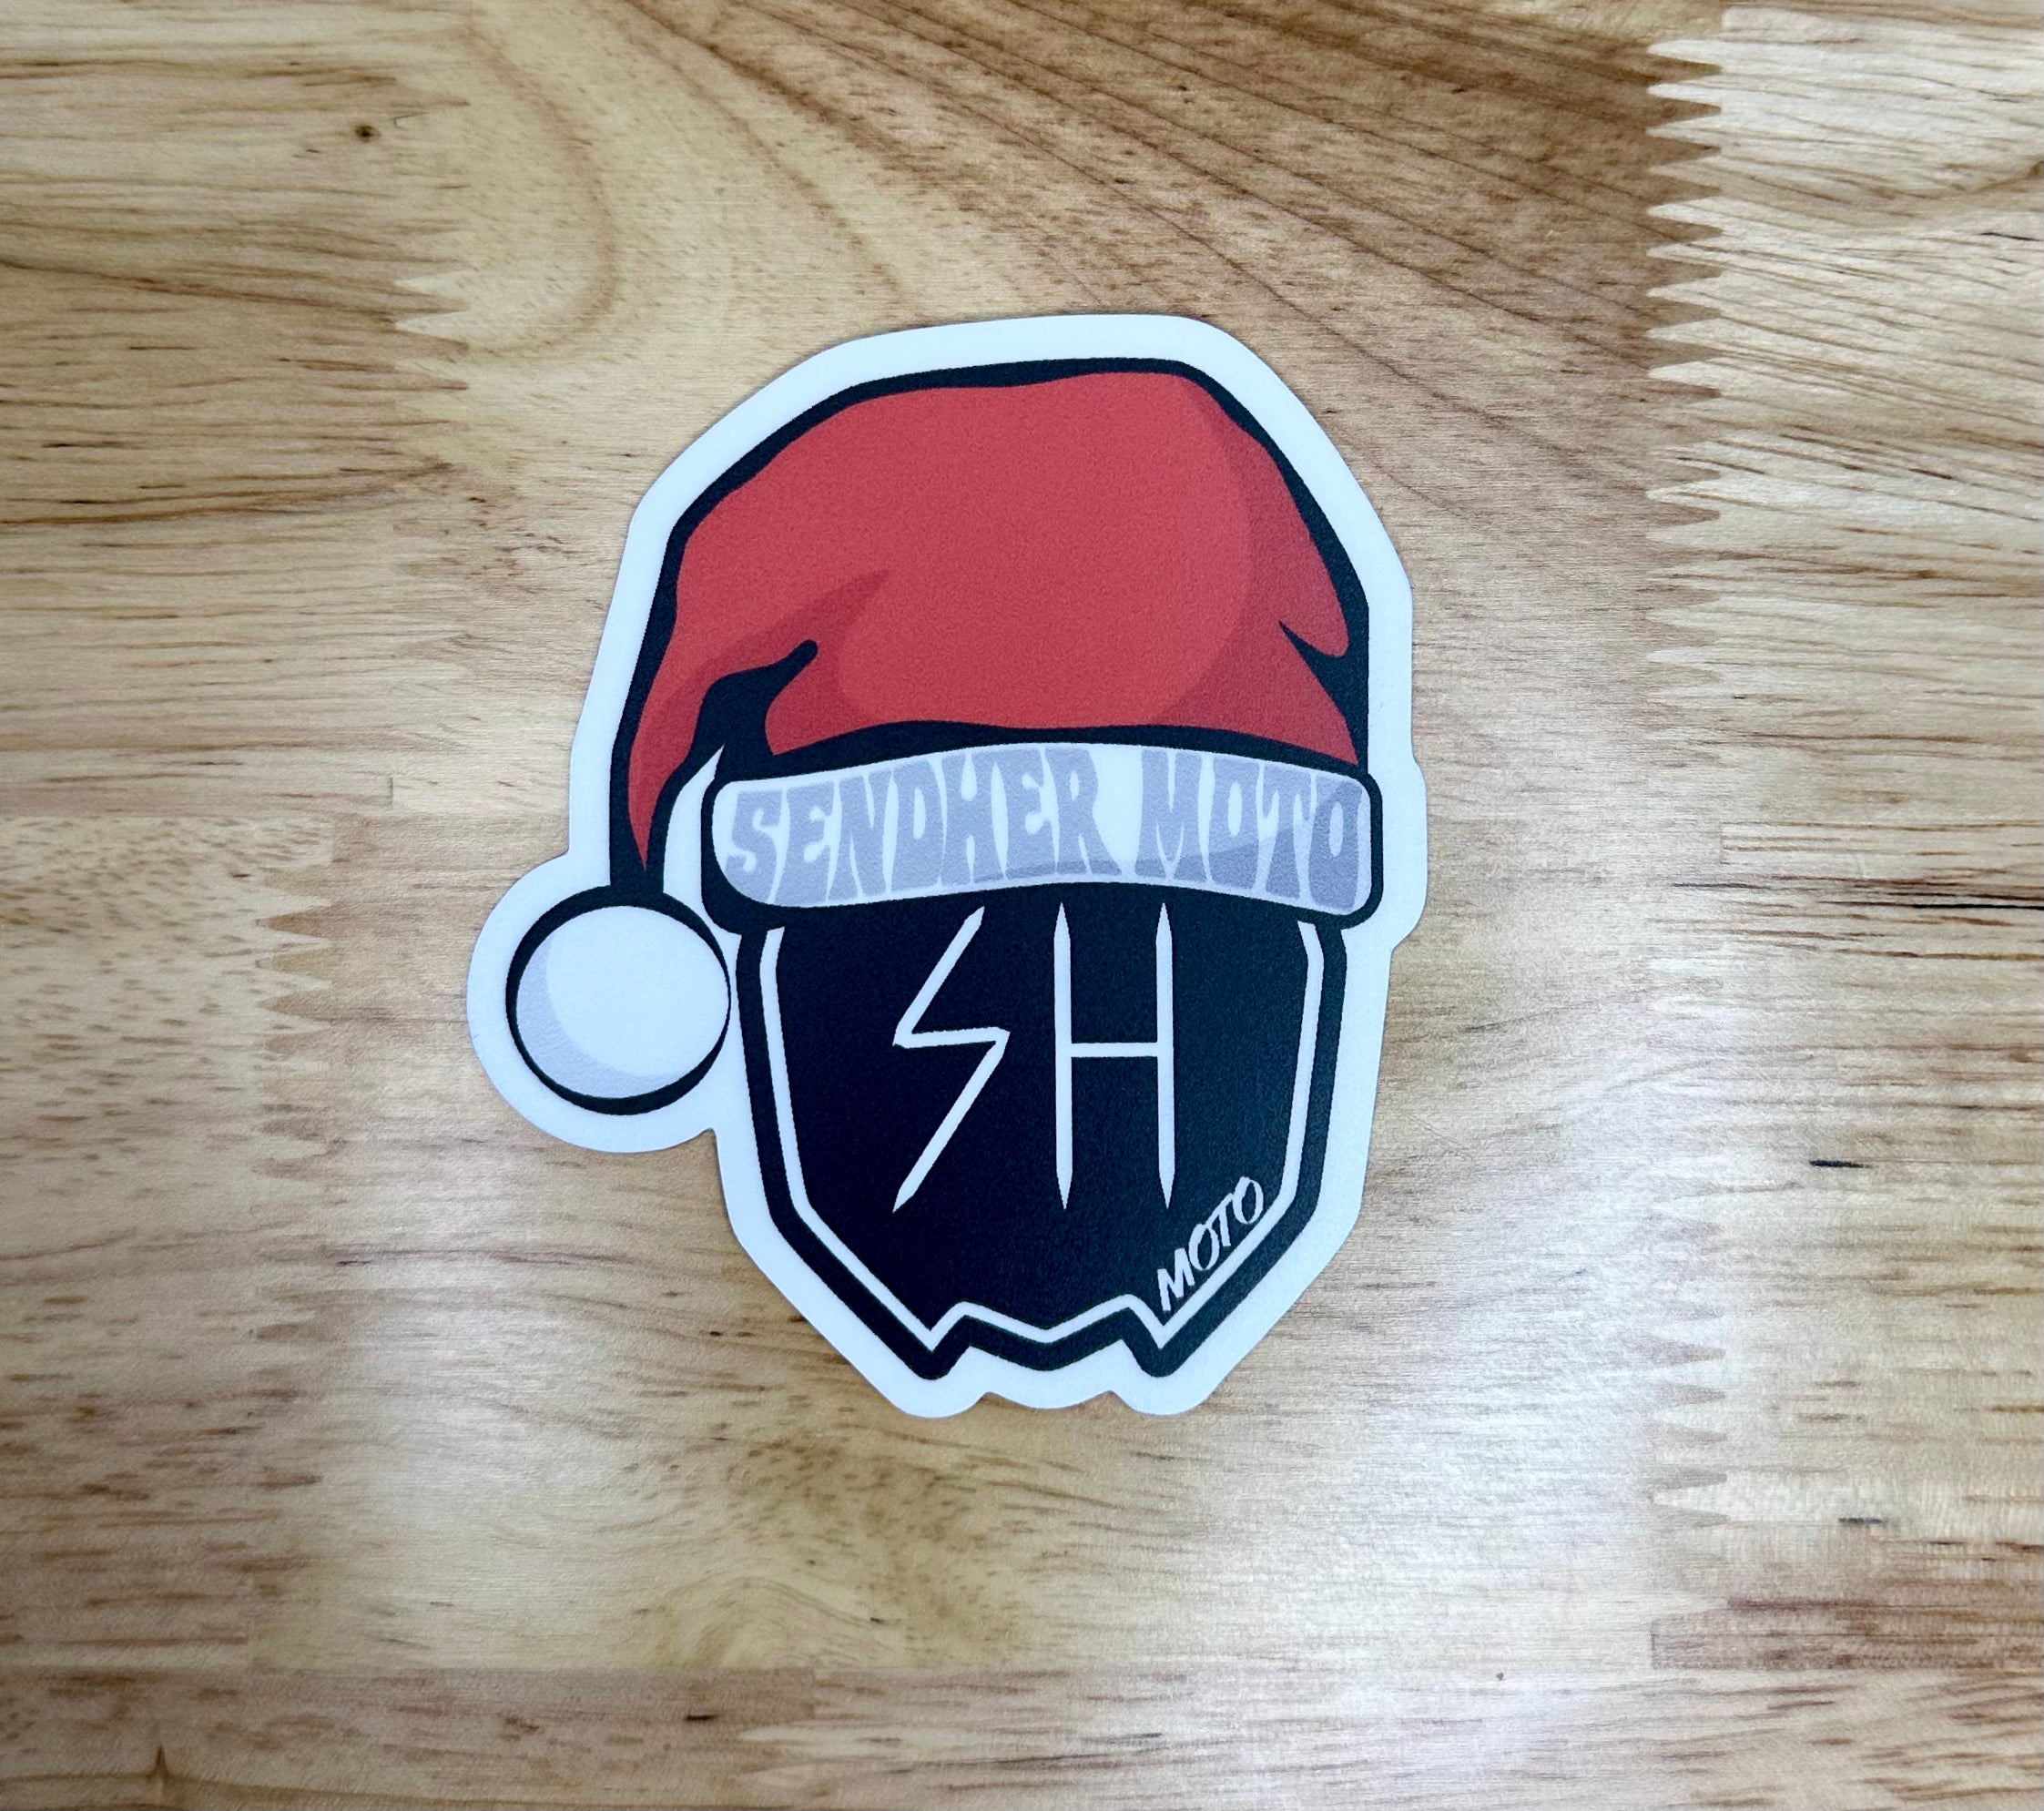 Sendher Moto Christmas Sticker